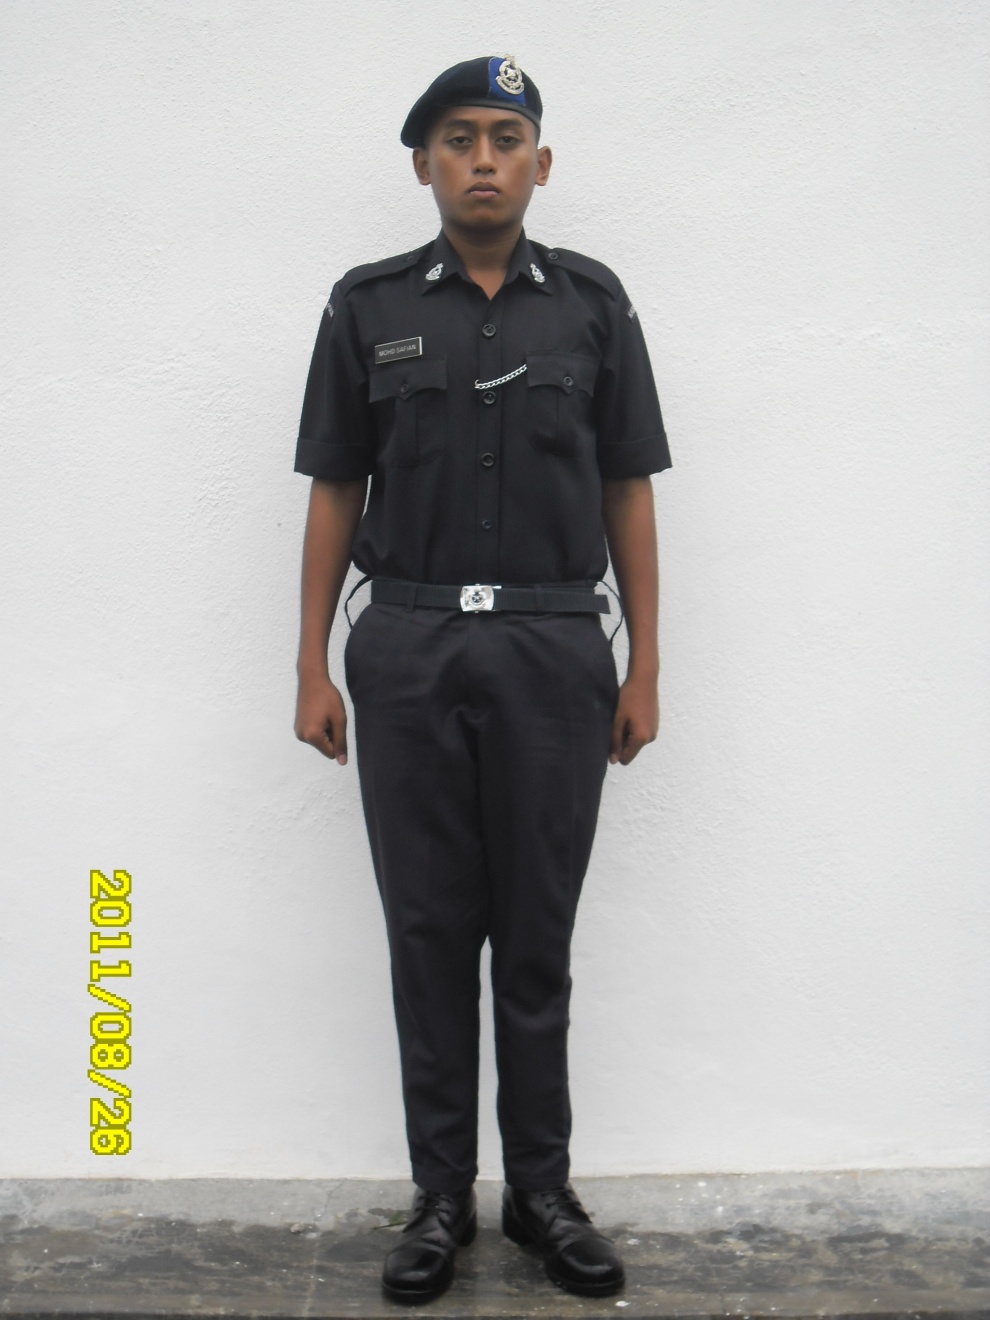  Kadet  Polis  SMKDI Uniform 